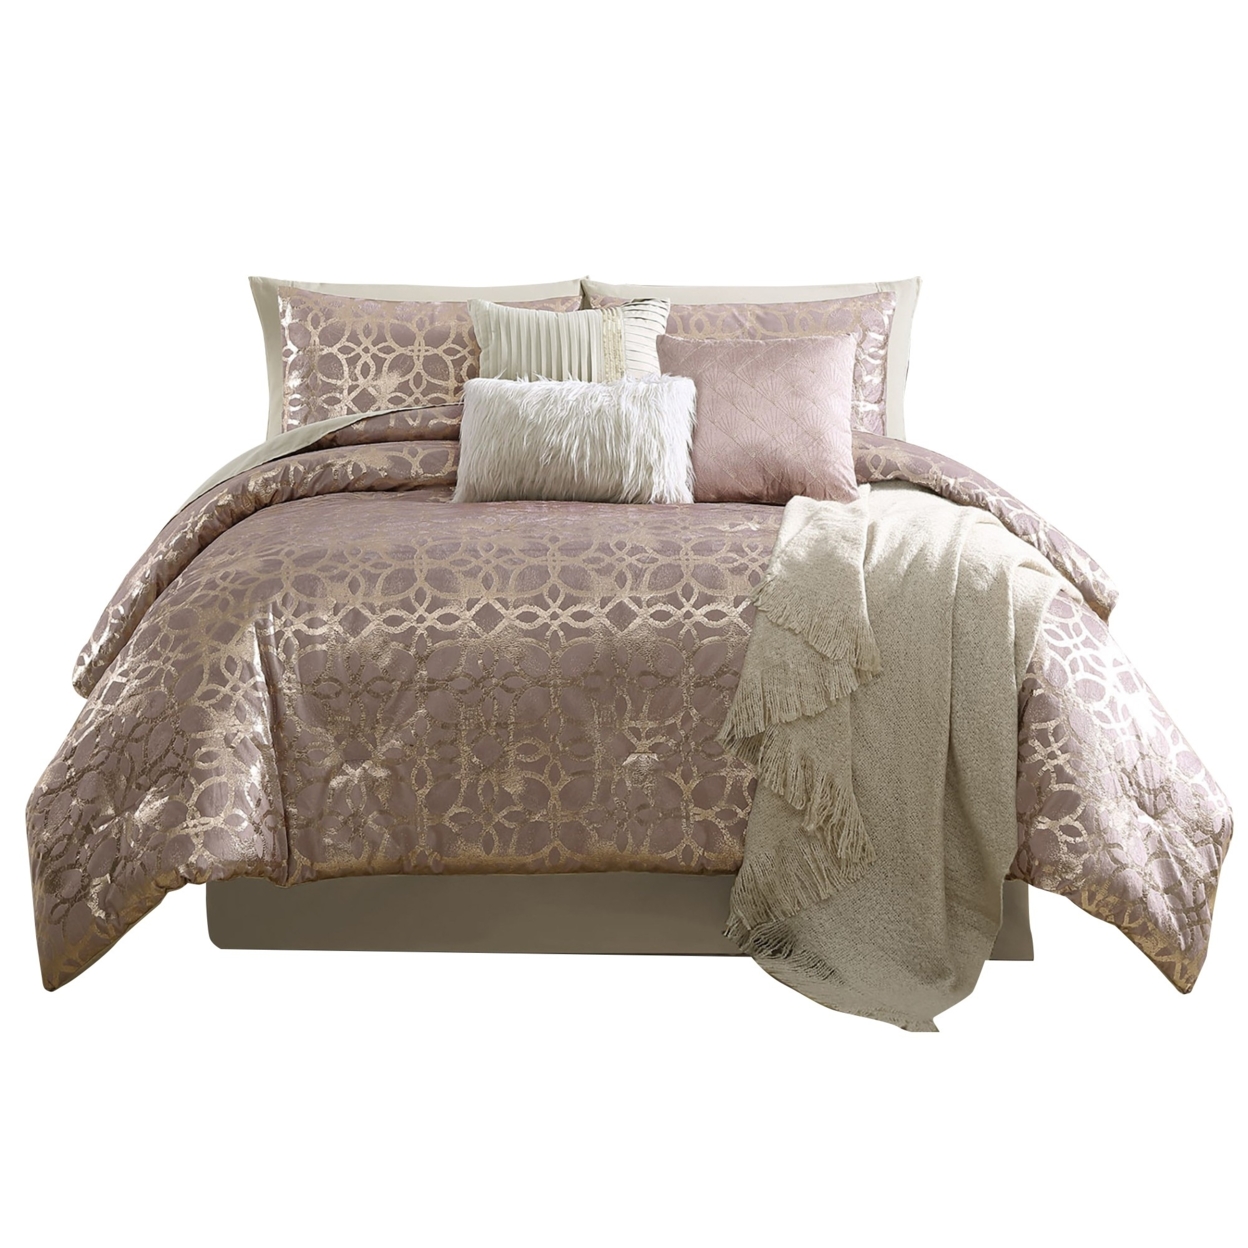 Eve 10 Piece Queen Size Poly Velvet Comforter Set, Foil Pattern, Blush Pink- Saltoro Sherpi